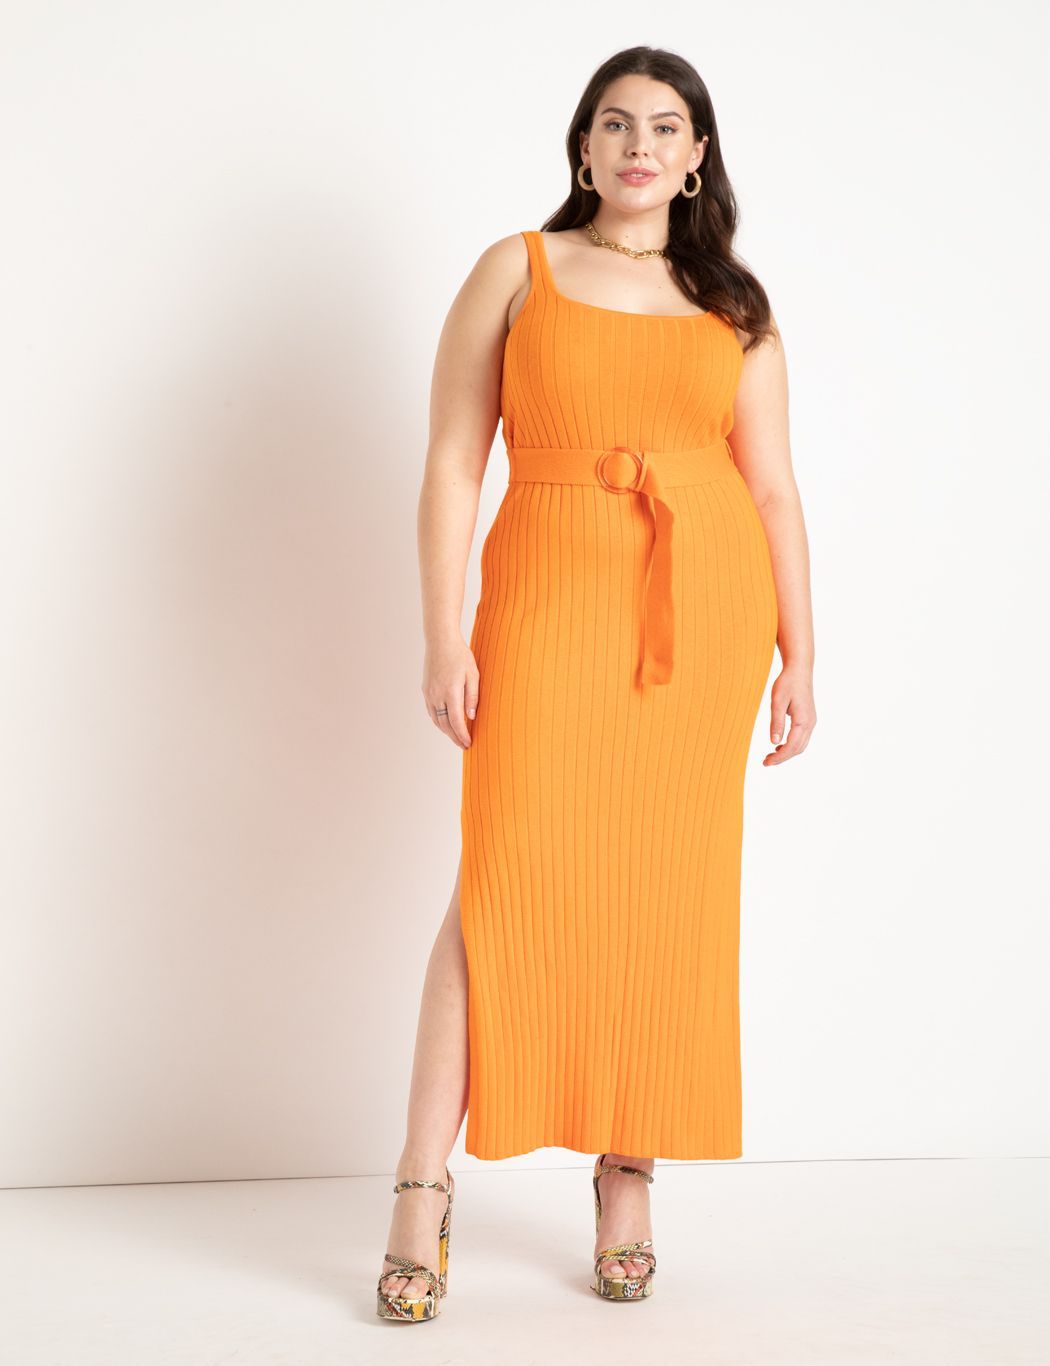 Knitted Rib Maxi Dress With Belt | Women's Plus Size Dresses | ELOQUII | Eloquii